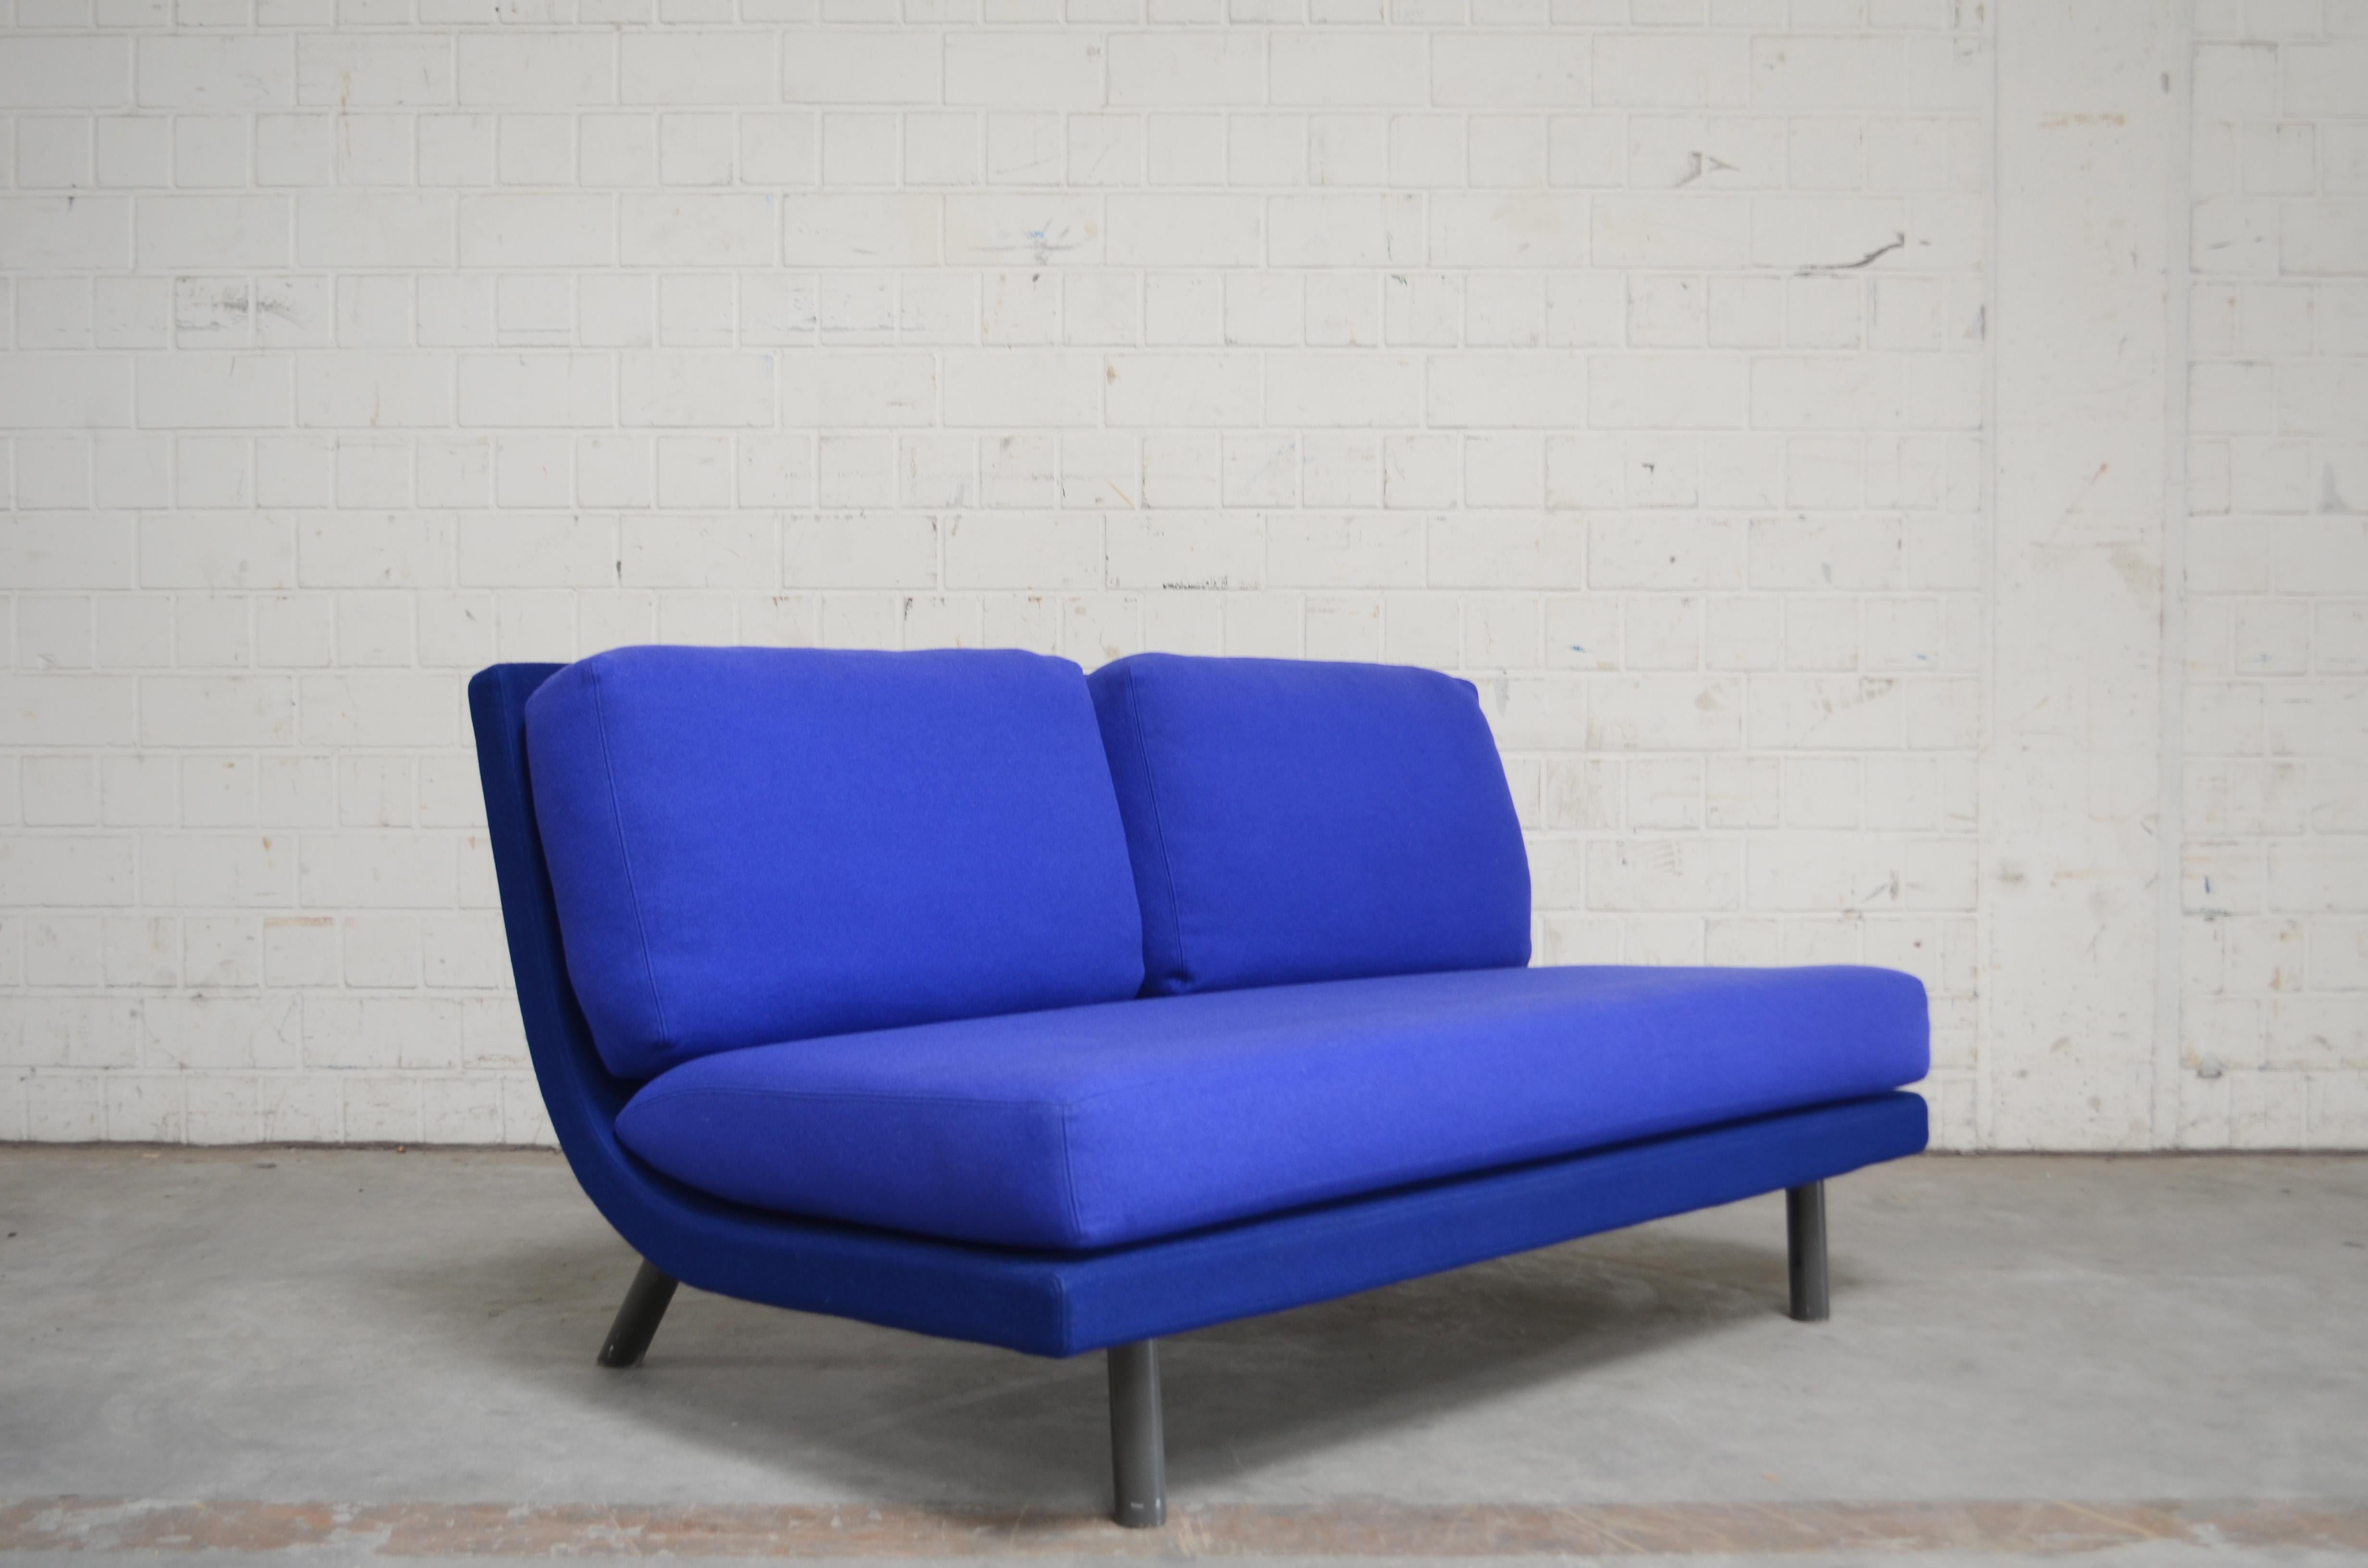 Rare Prototype Sofa Design by David Chipperfield for Interlübke 8